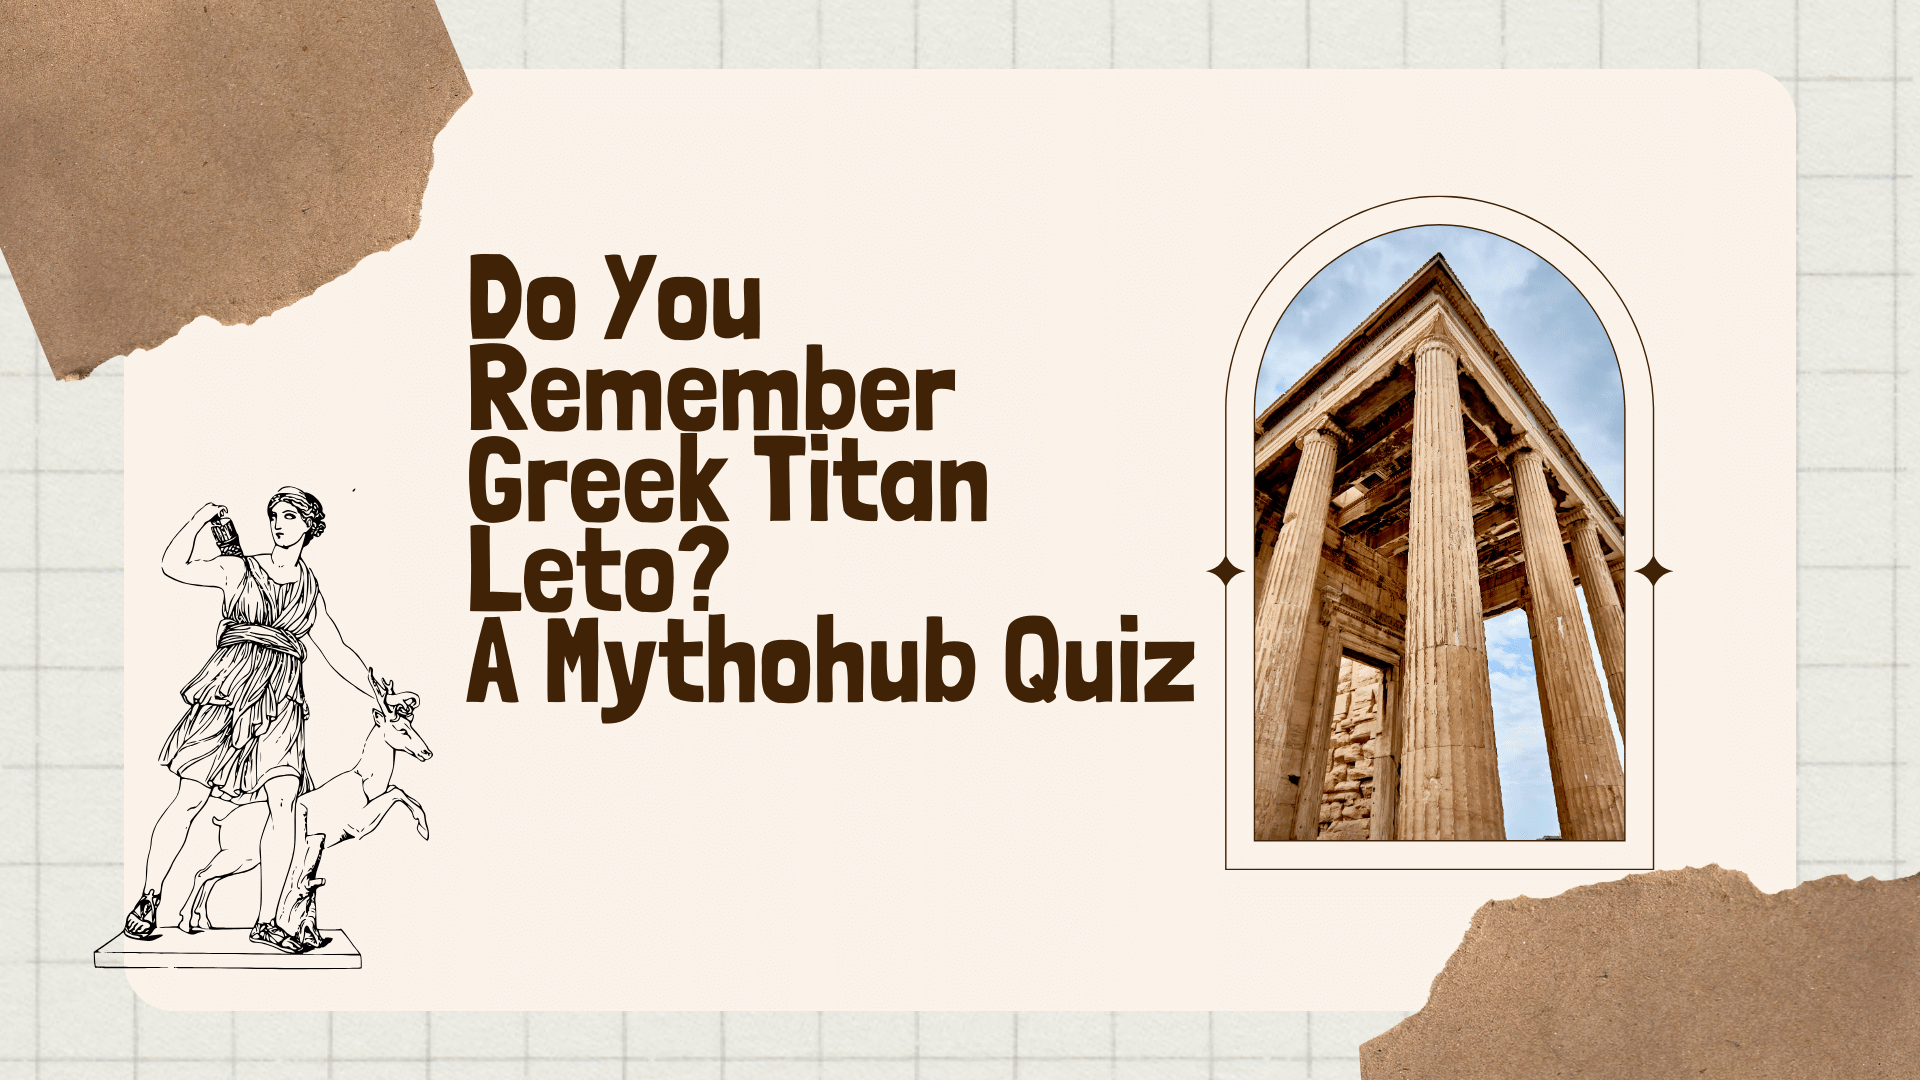 Do You Remember Greek Titan Leto? A Mythohub Quiz